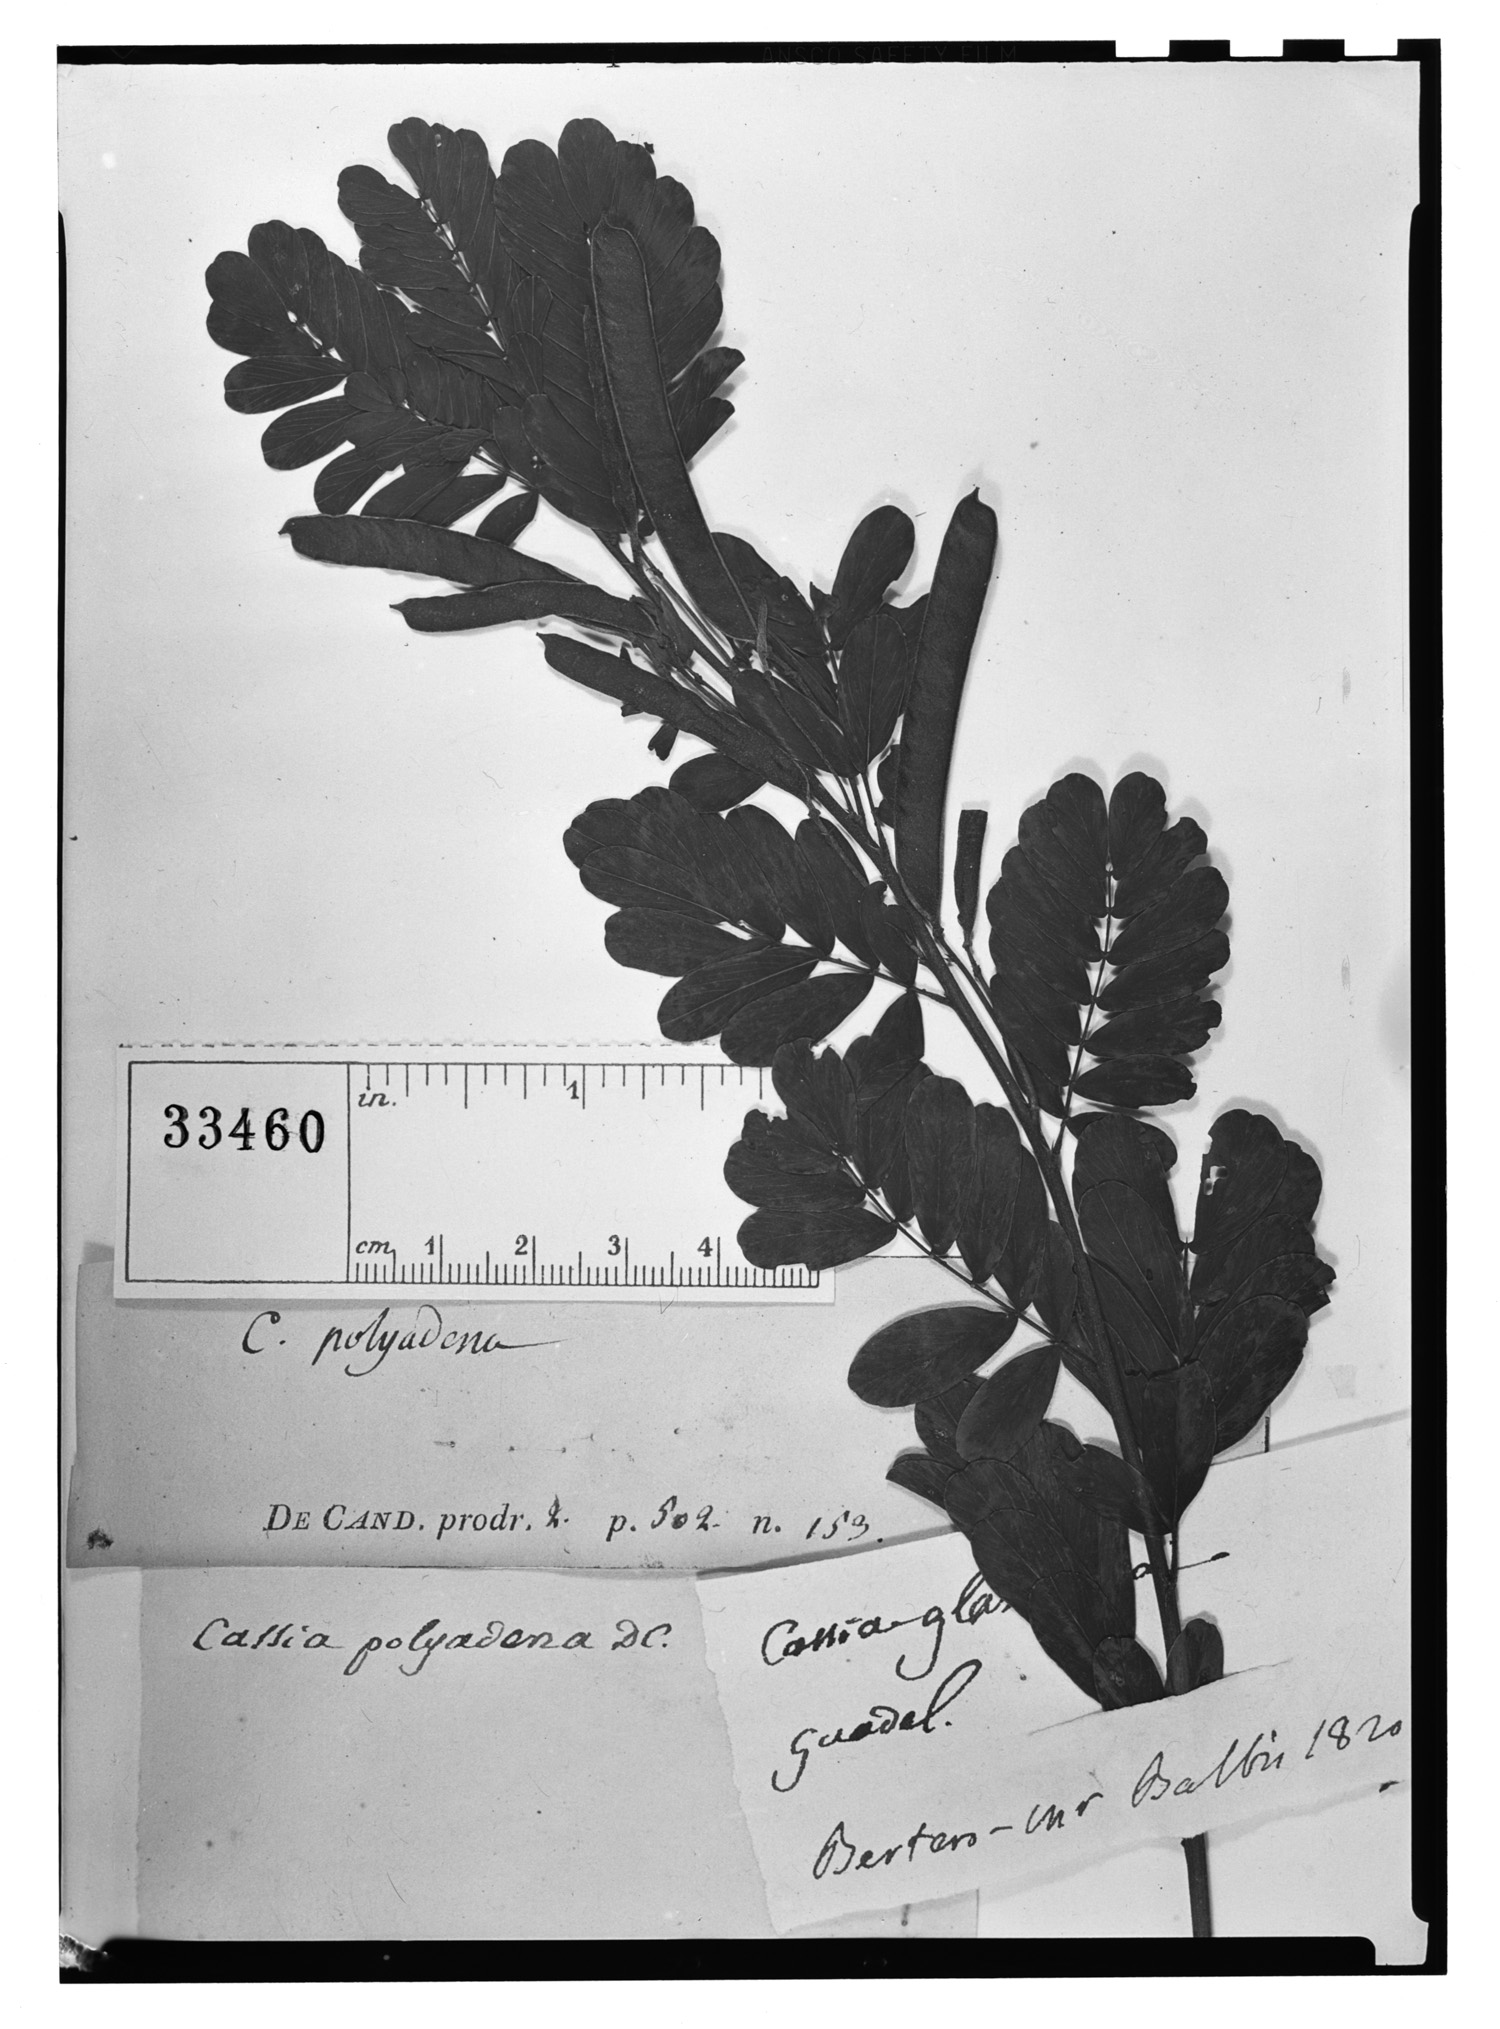 Chamaecrista glandulosa var. swartzii image